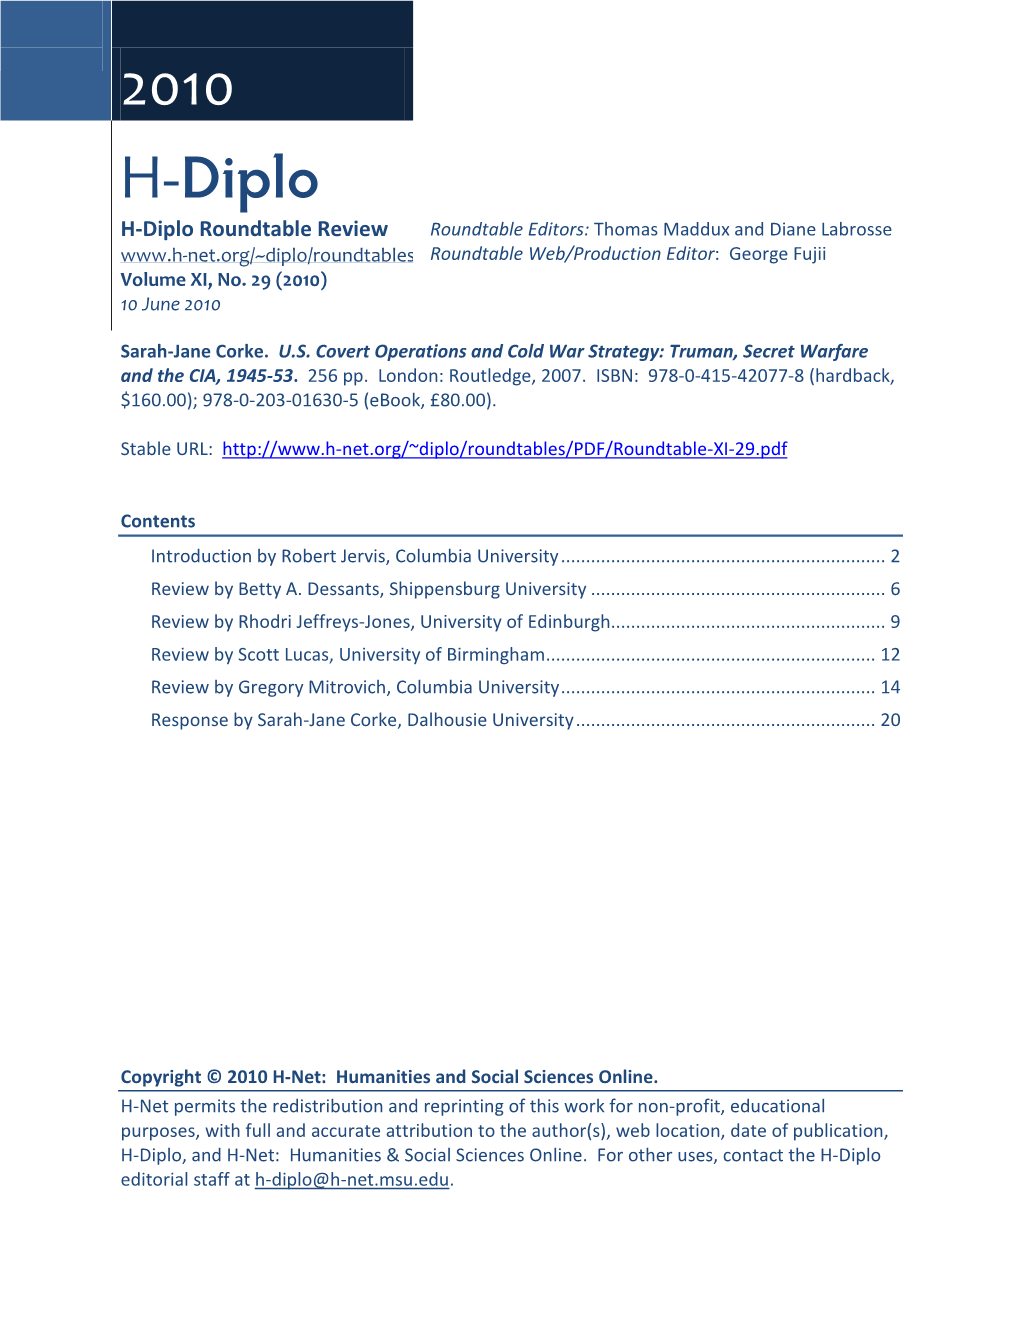 H-Diplo Roundtable, Vol. XI, No. 29